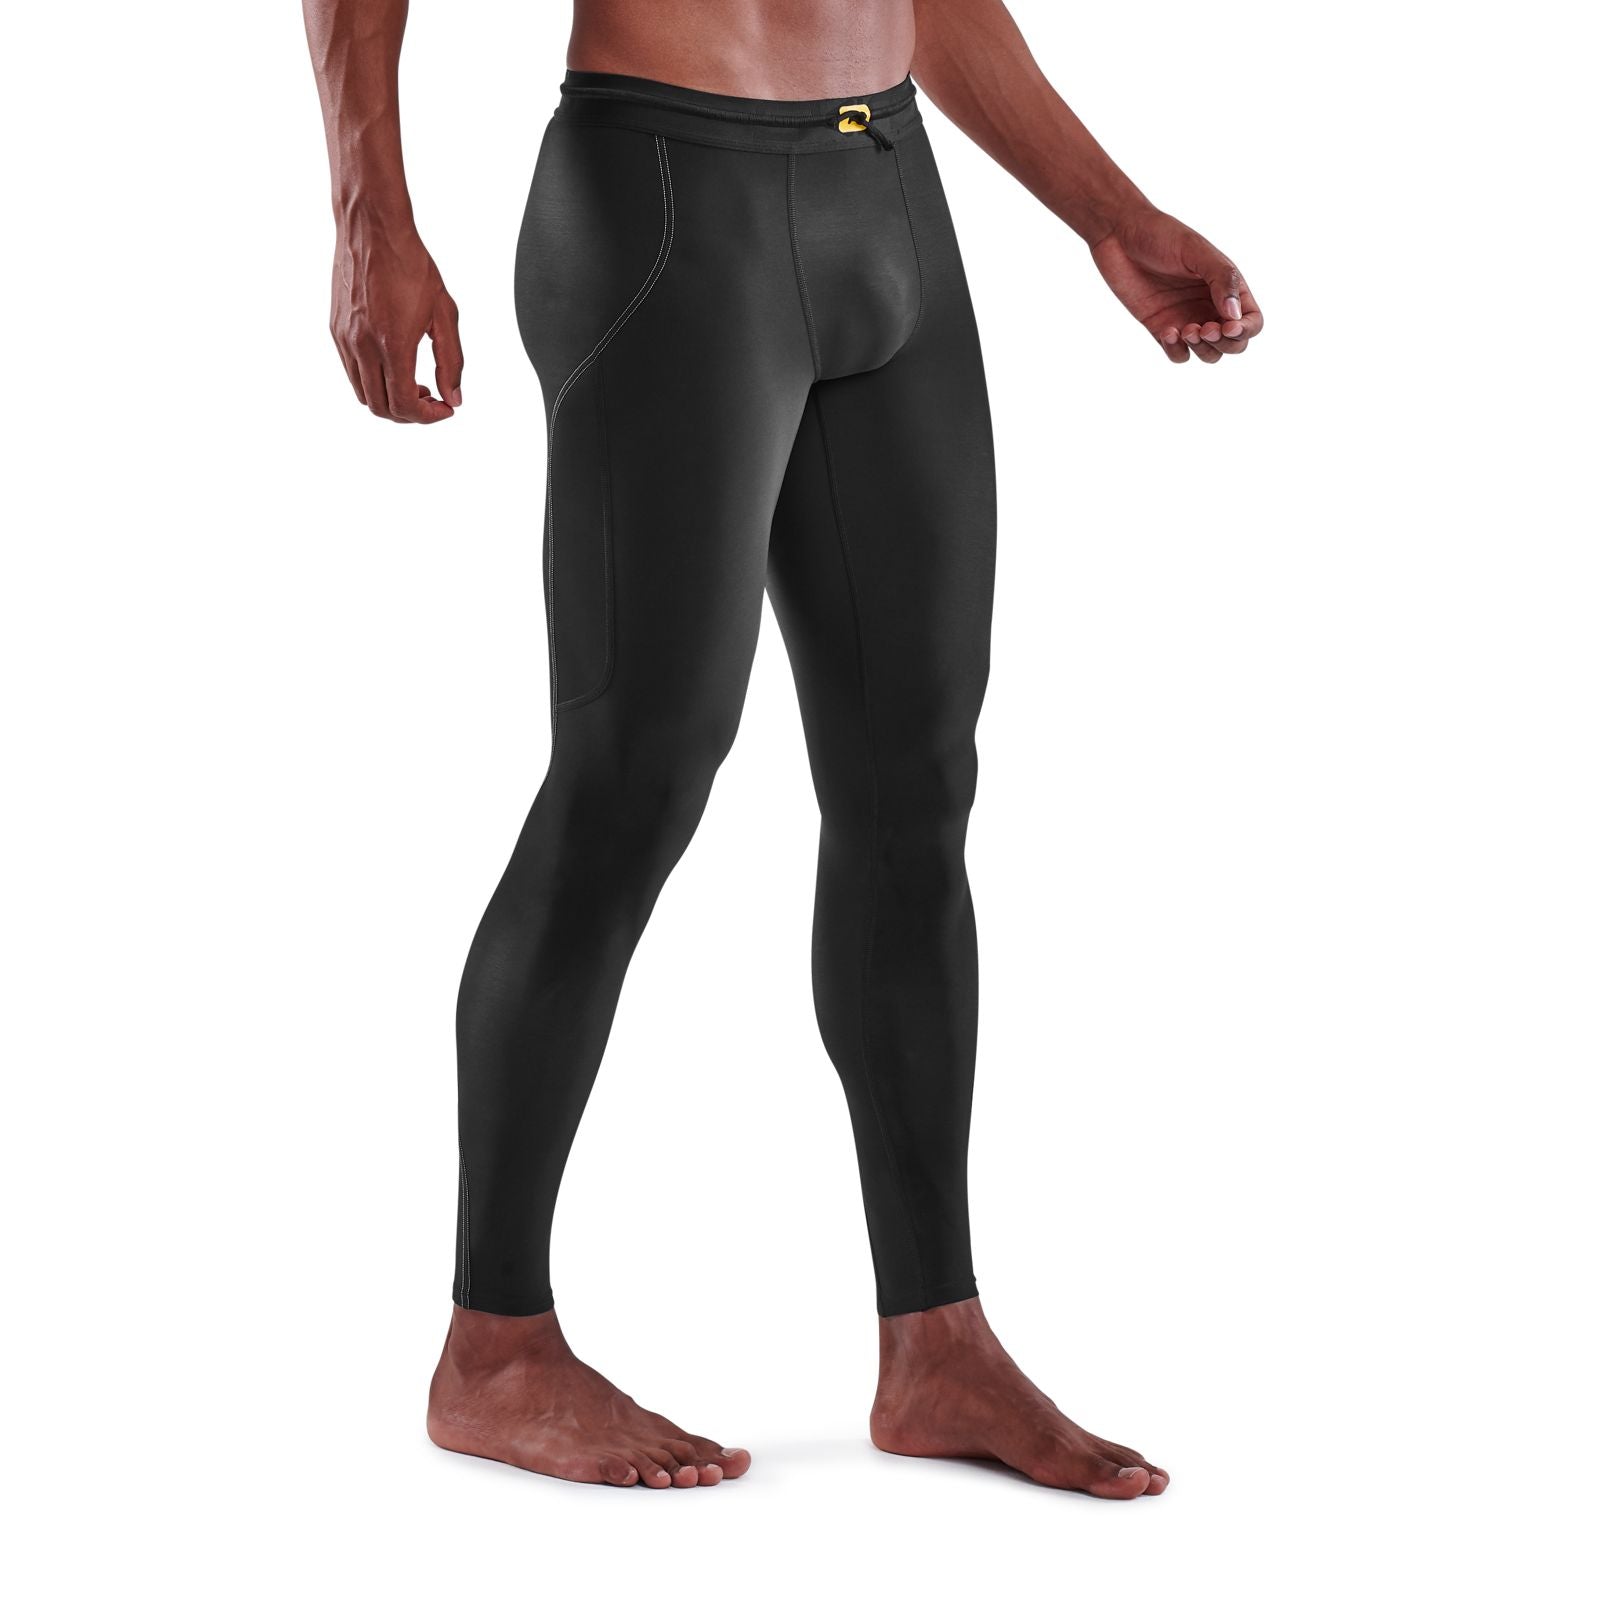 Skins Series-3 Calza Larga Men's Long Tights Black